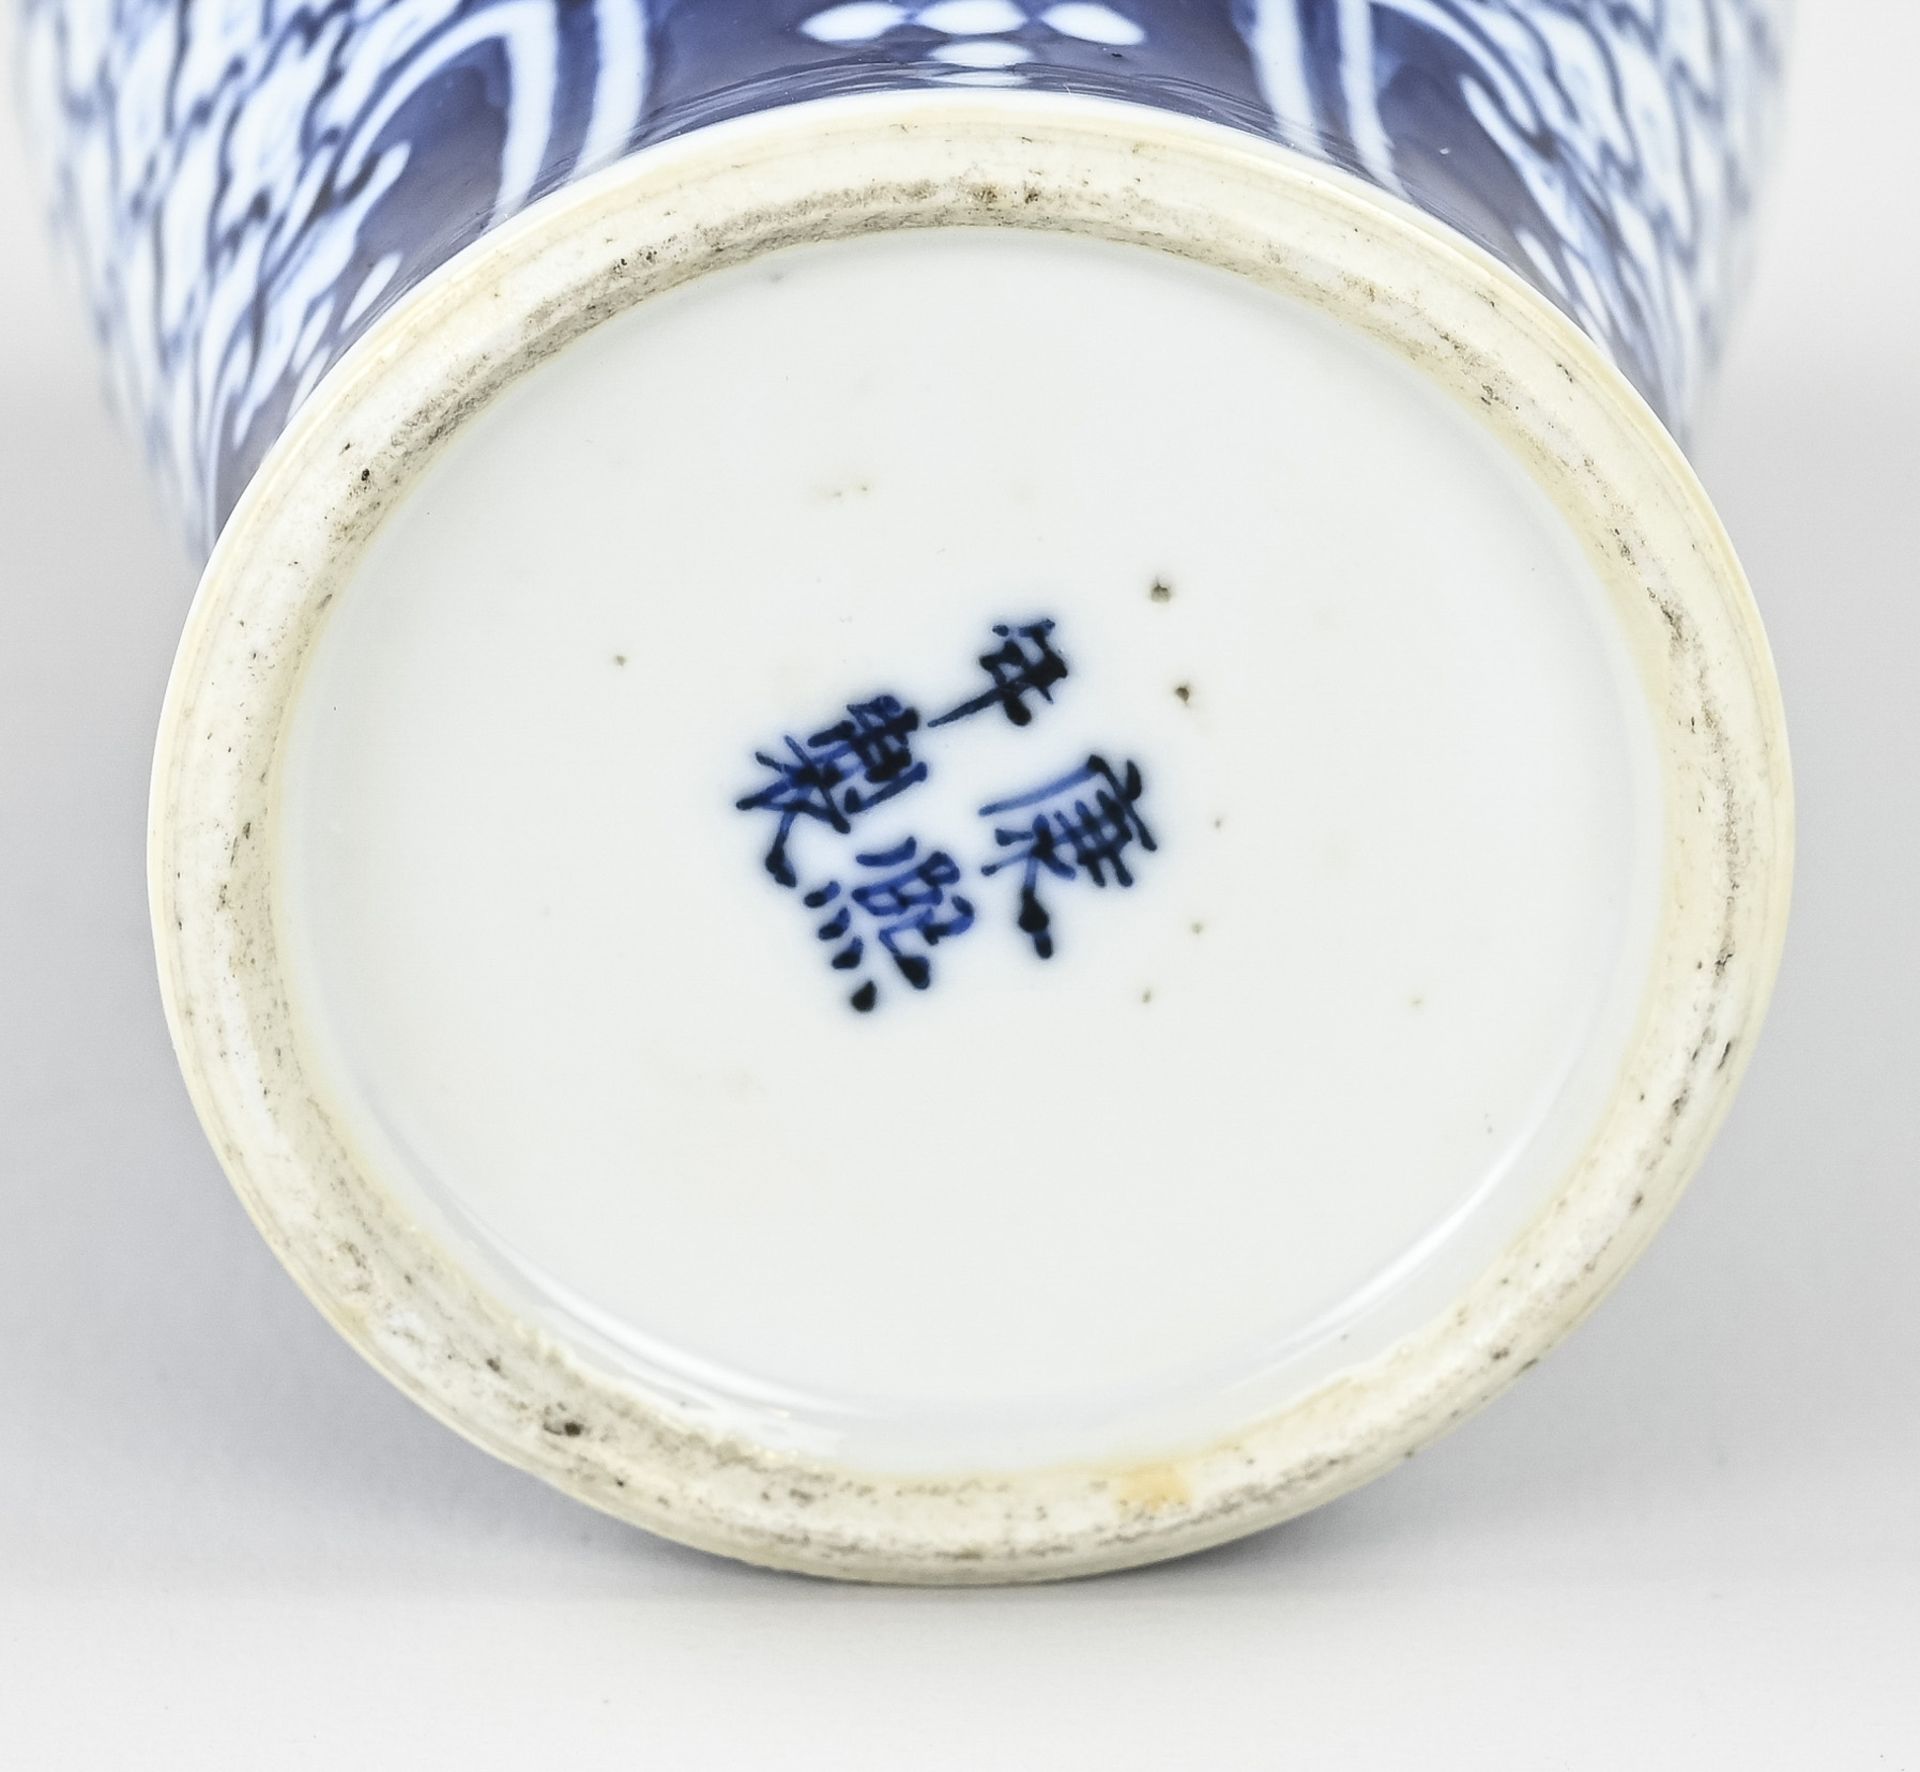 19th century Chinese vase, H 18 cm. - Image 2 of 2